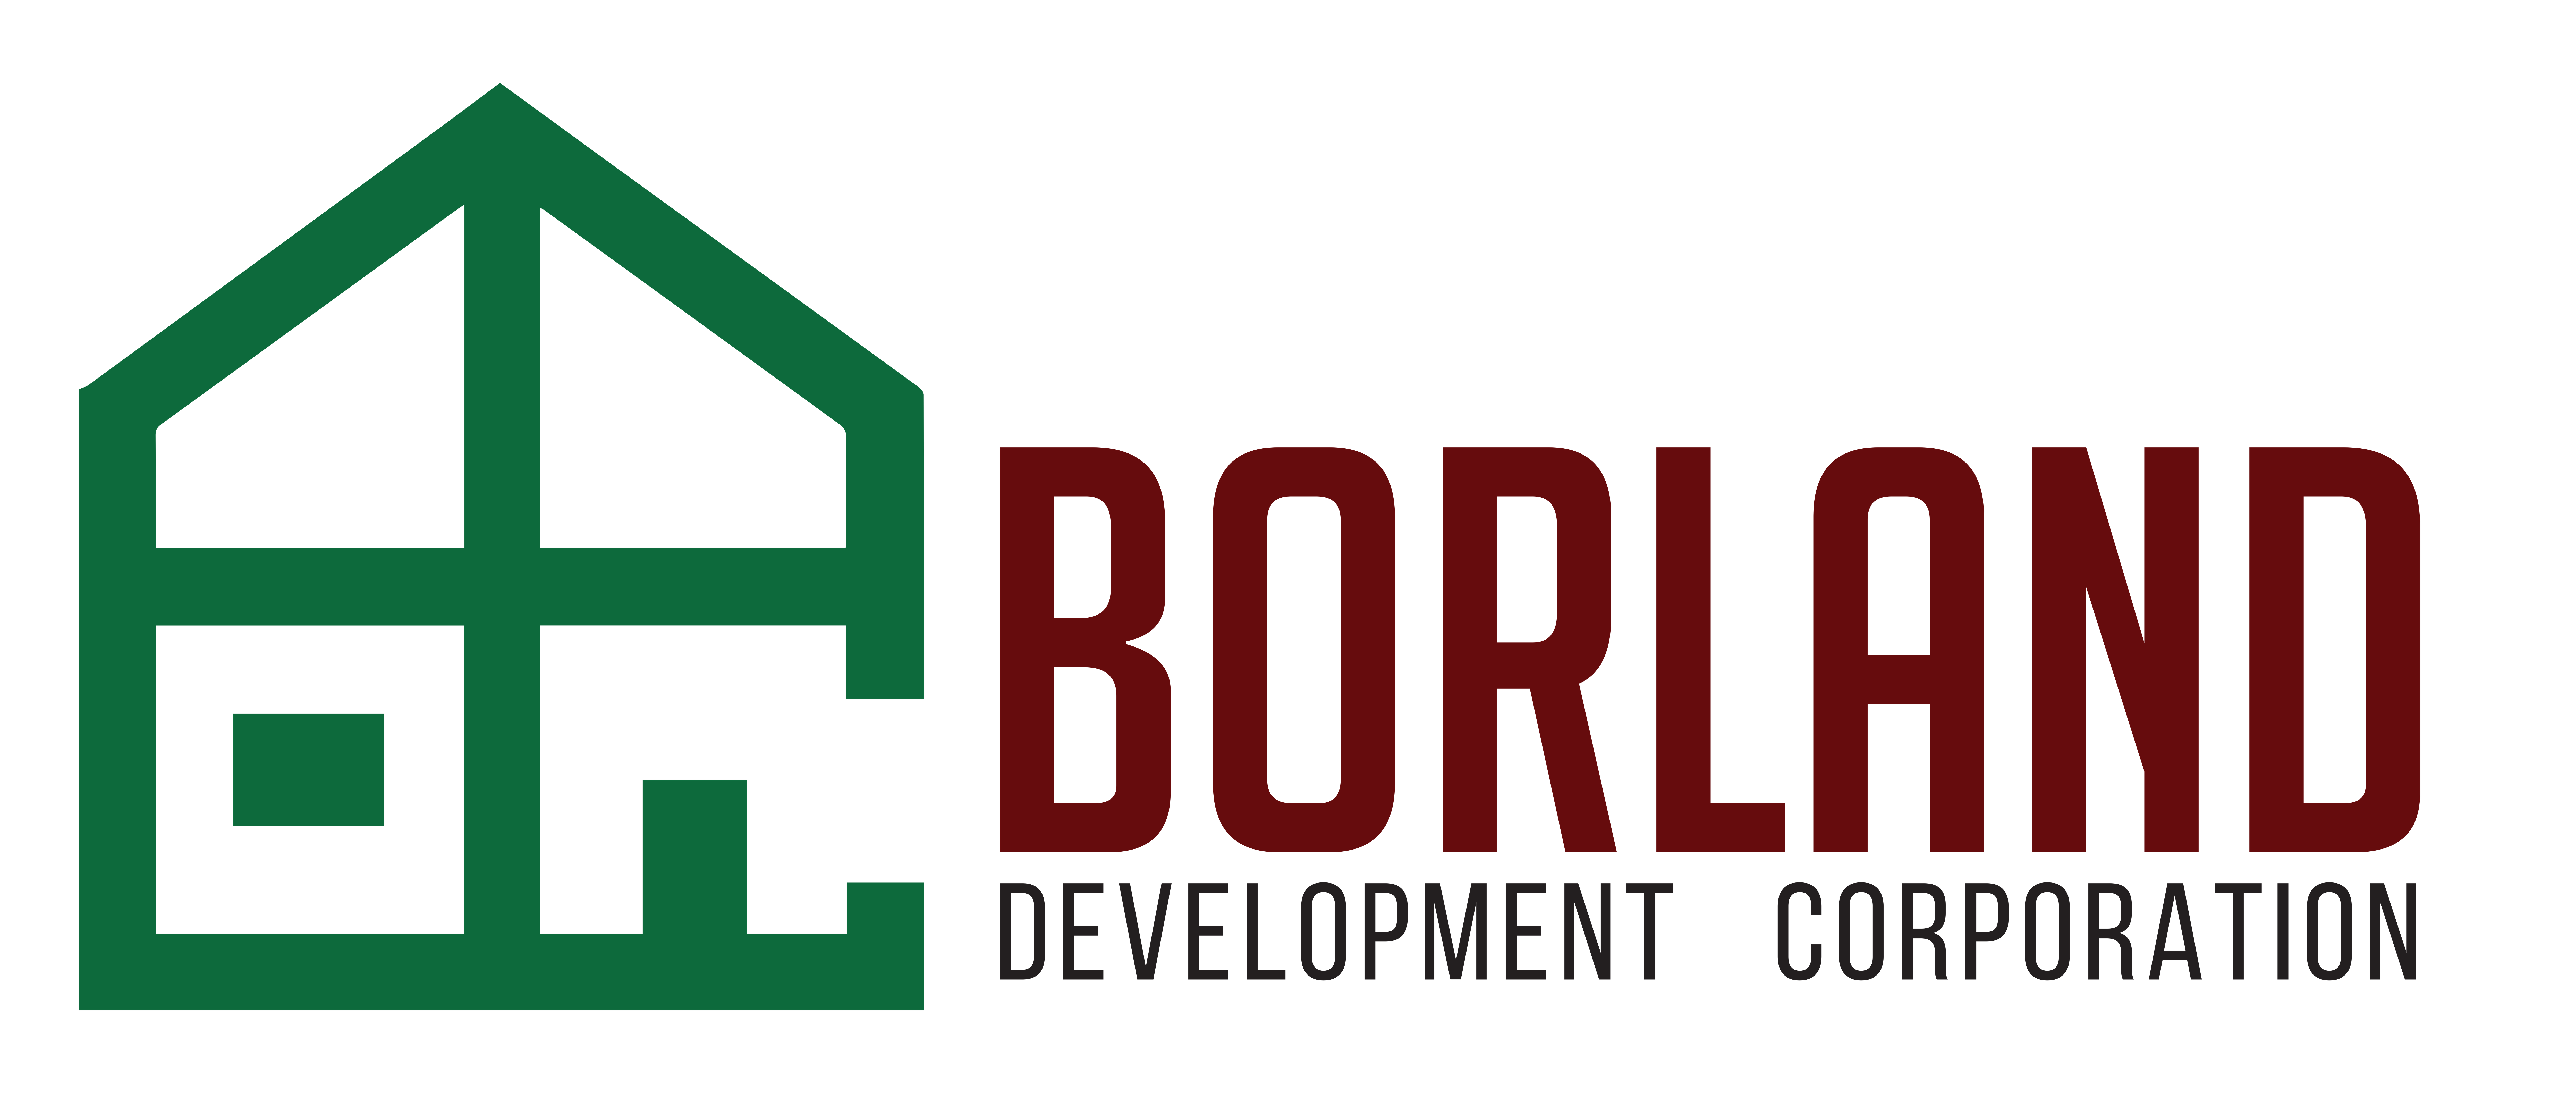 Borland Development Corporation